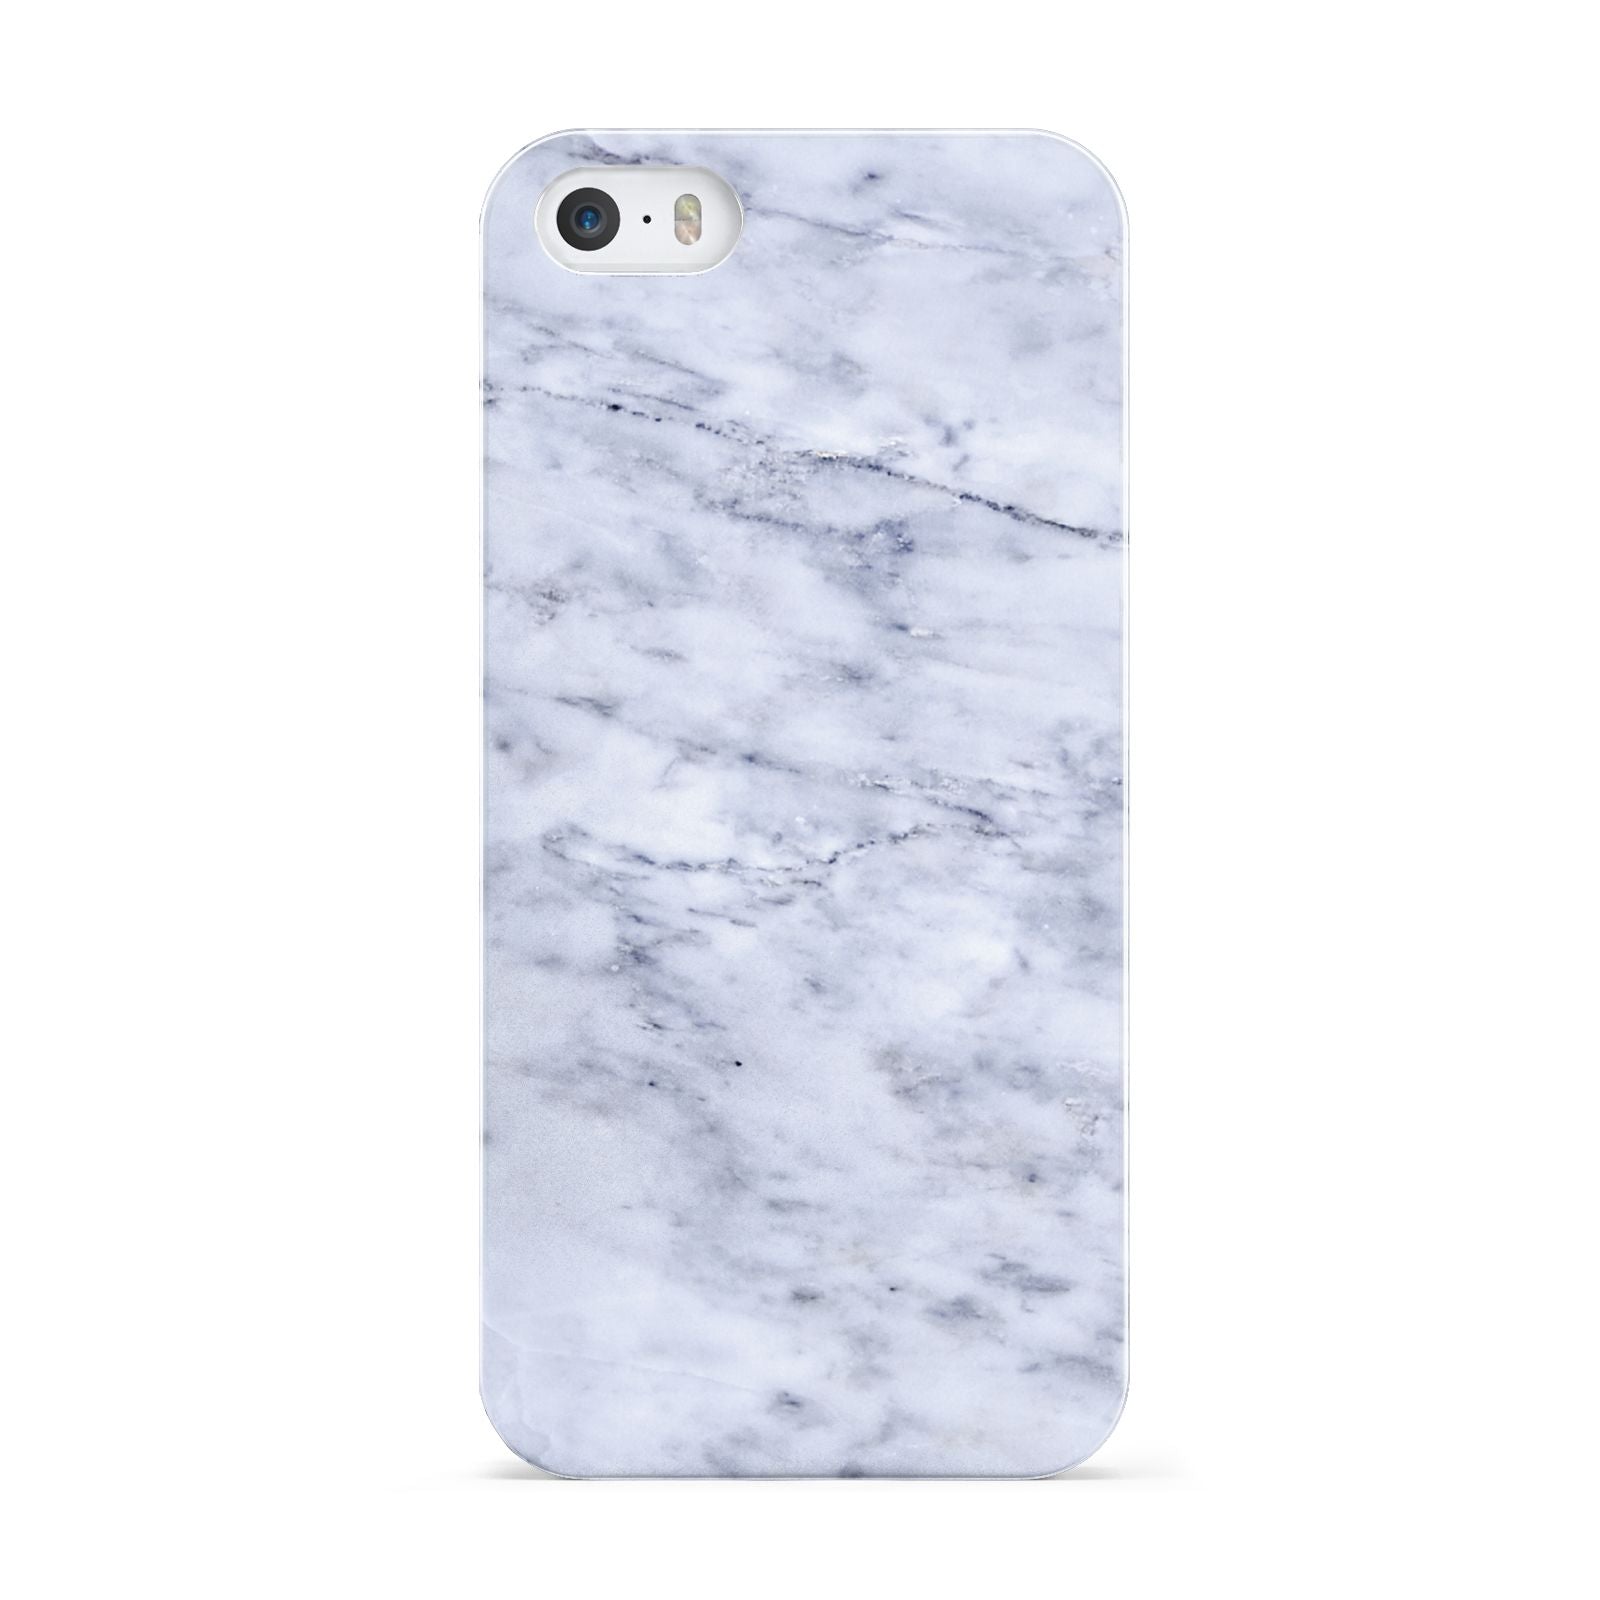 Faux Carrara Marble Print Apple iPhone 5 Case